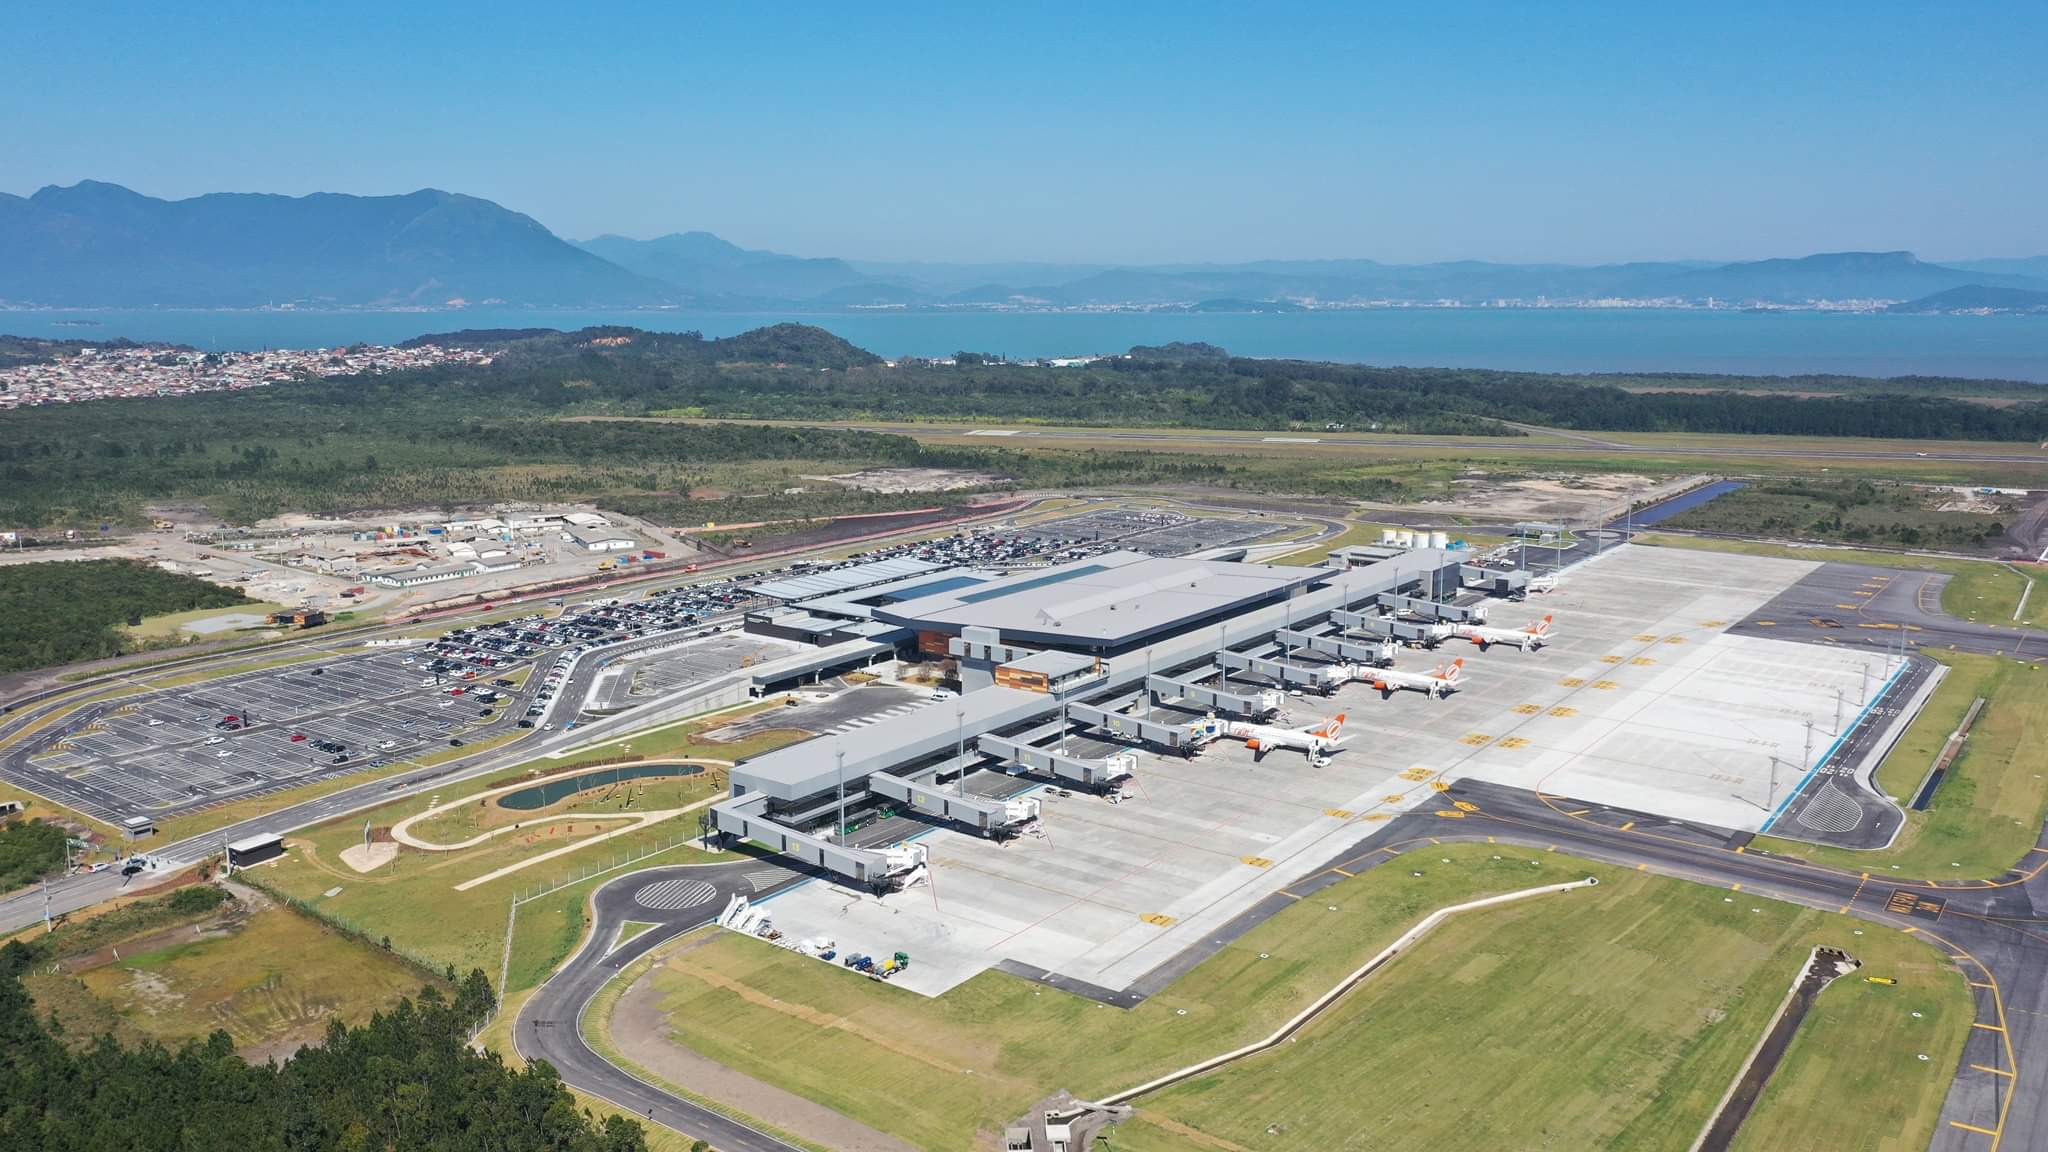 Aeroporto Internacional de Florianópolis – Hercílio Luz - NR Topografia